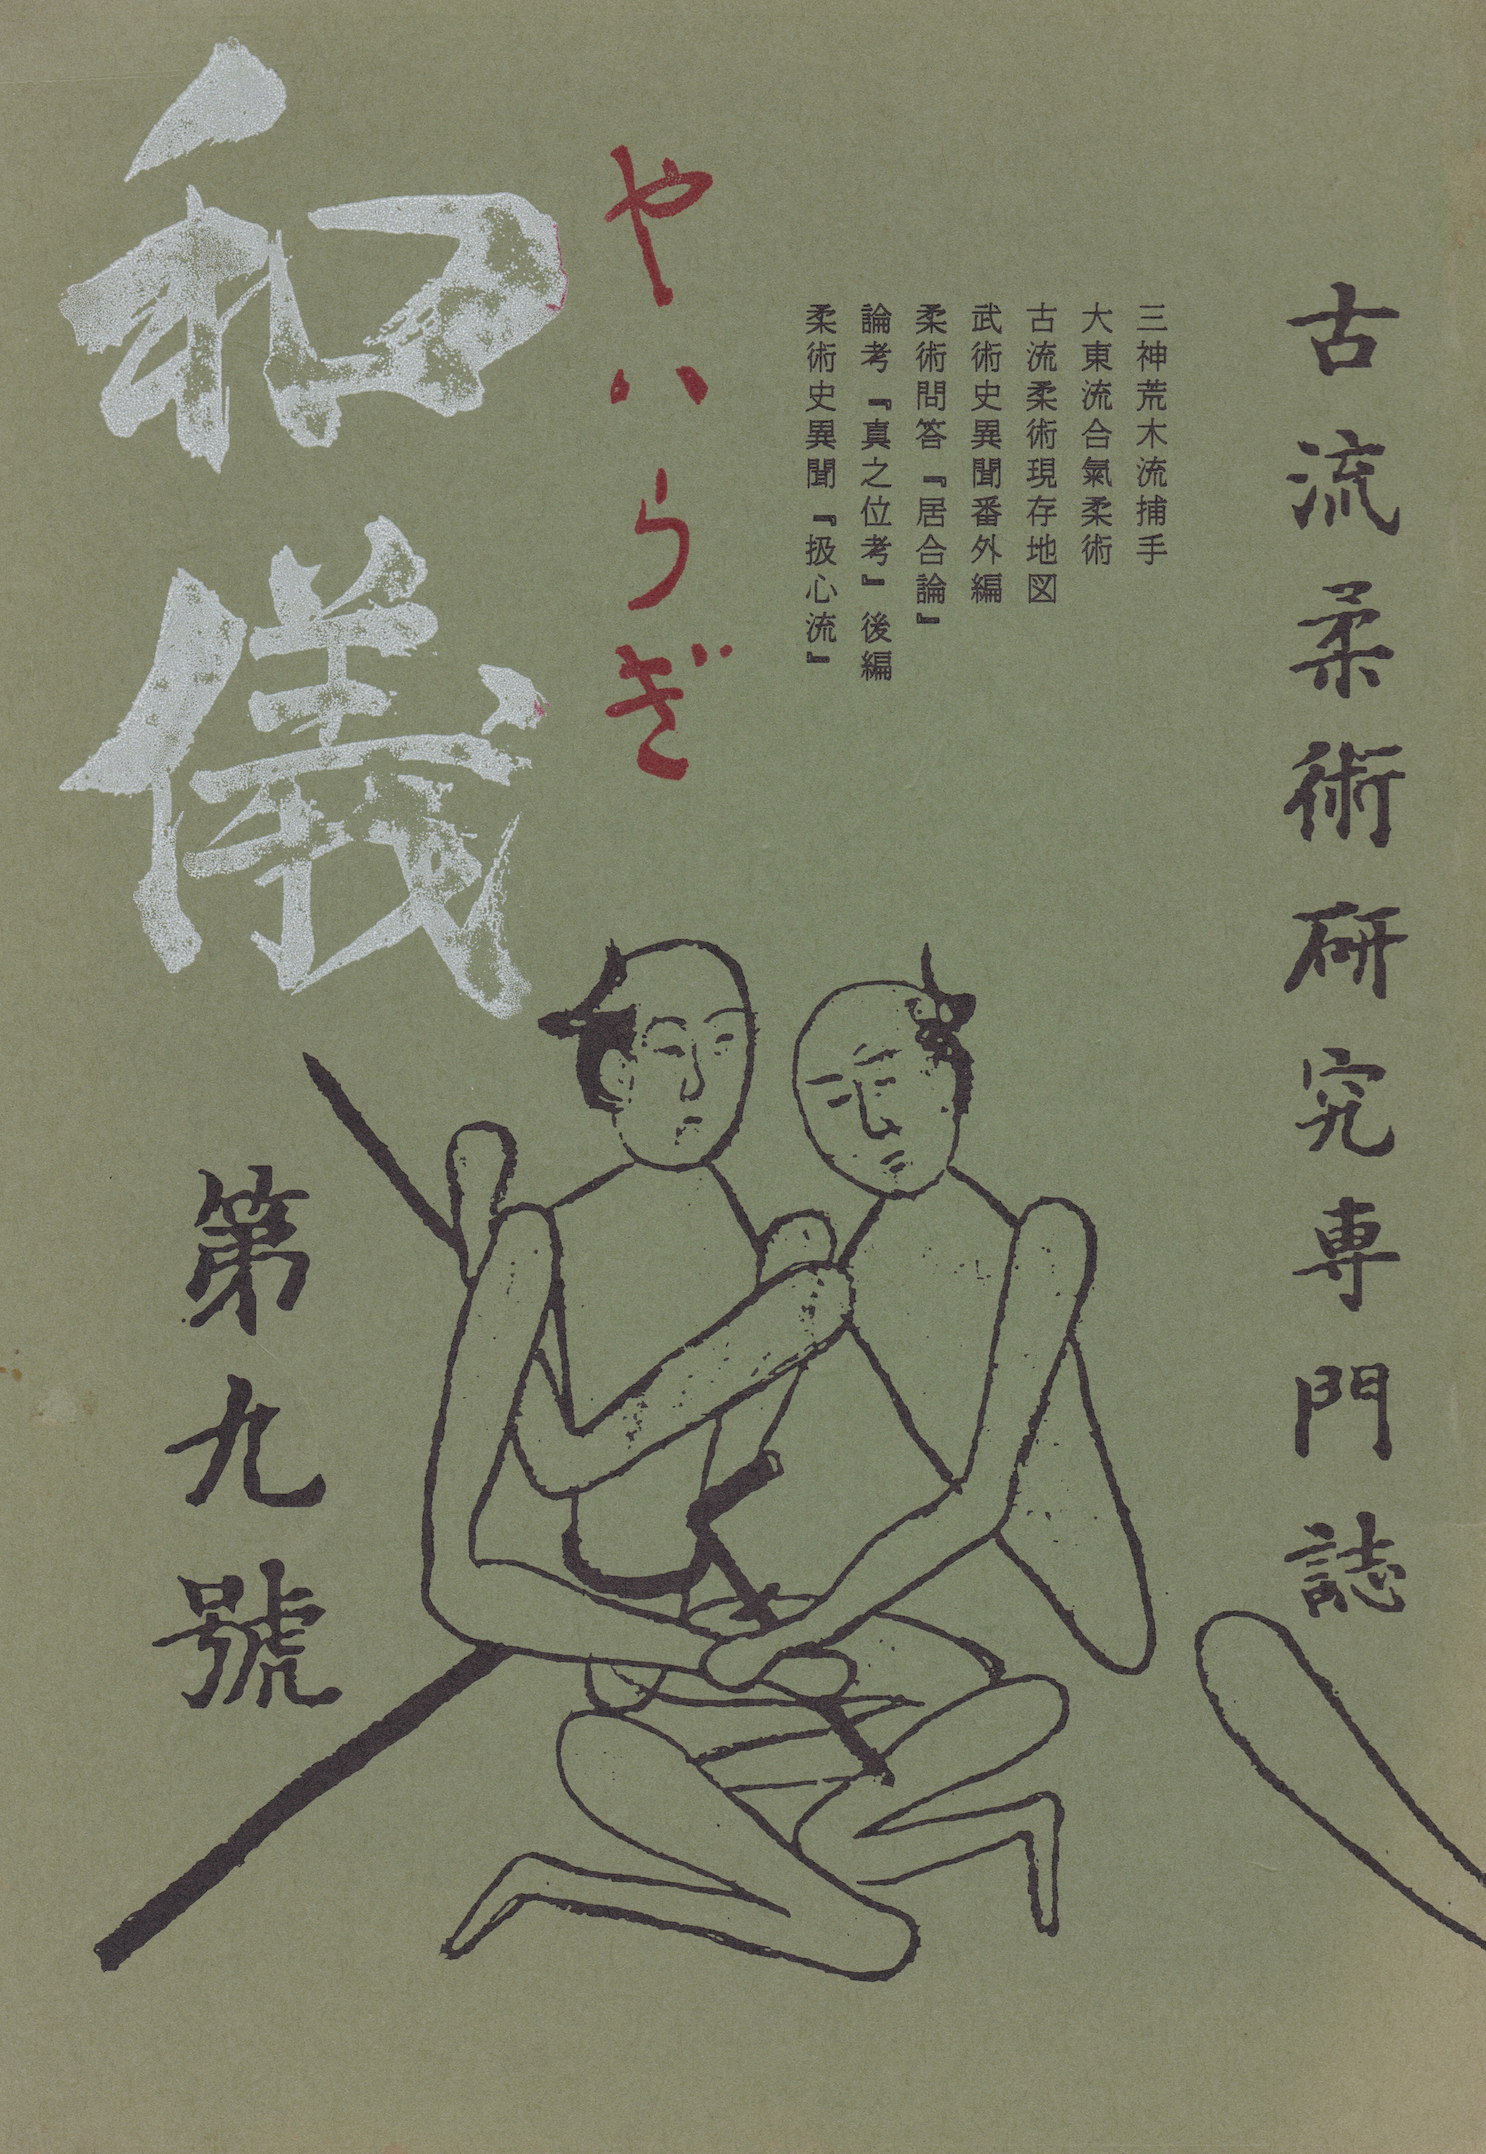 Yairagi Koryu Jujutsu Research Journal #9 (Preowned)